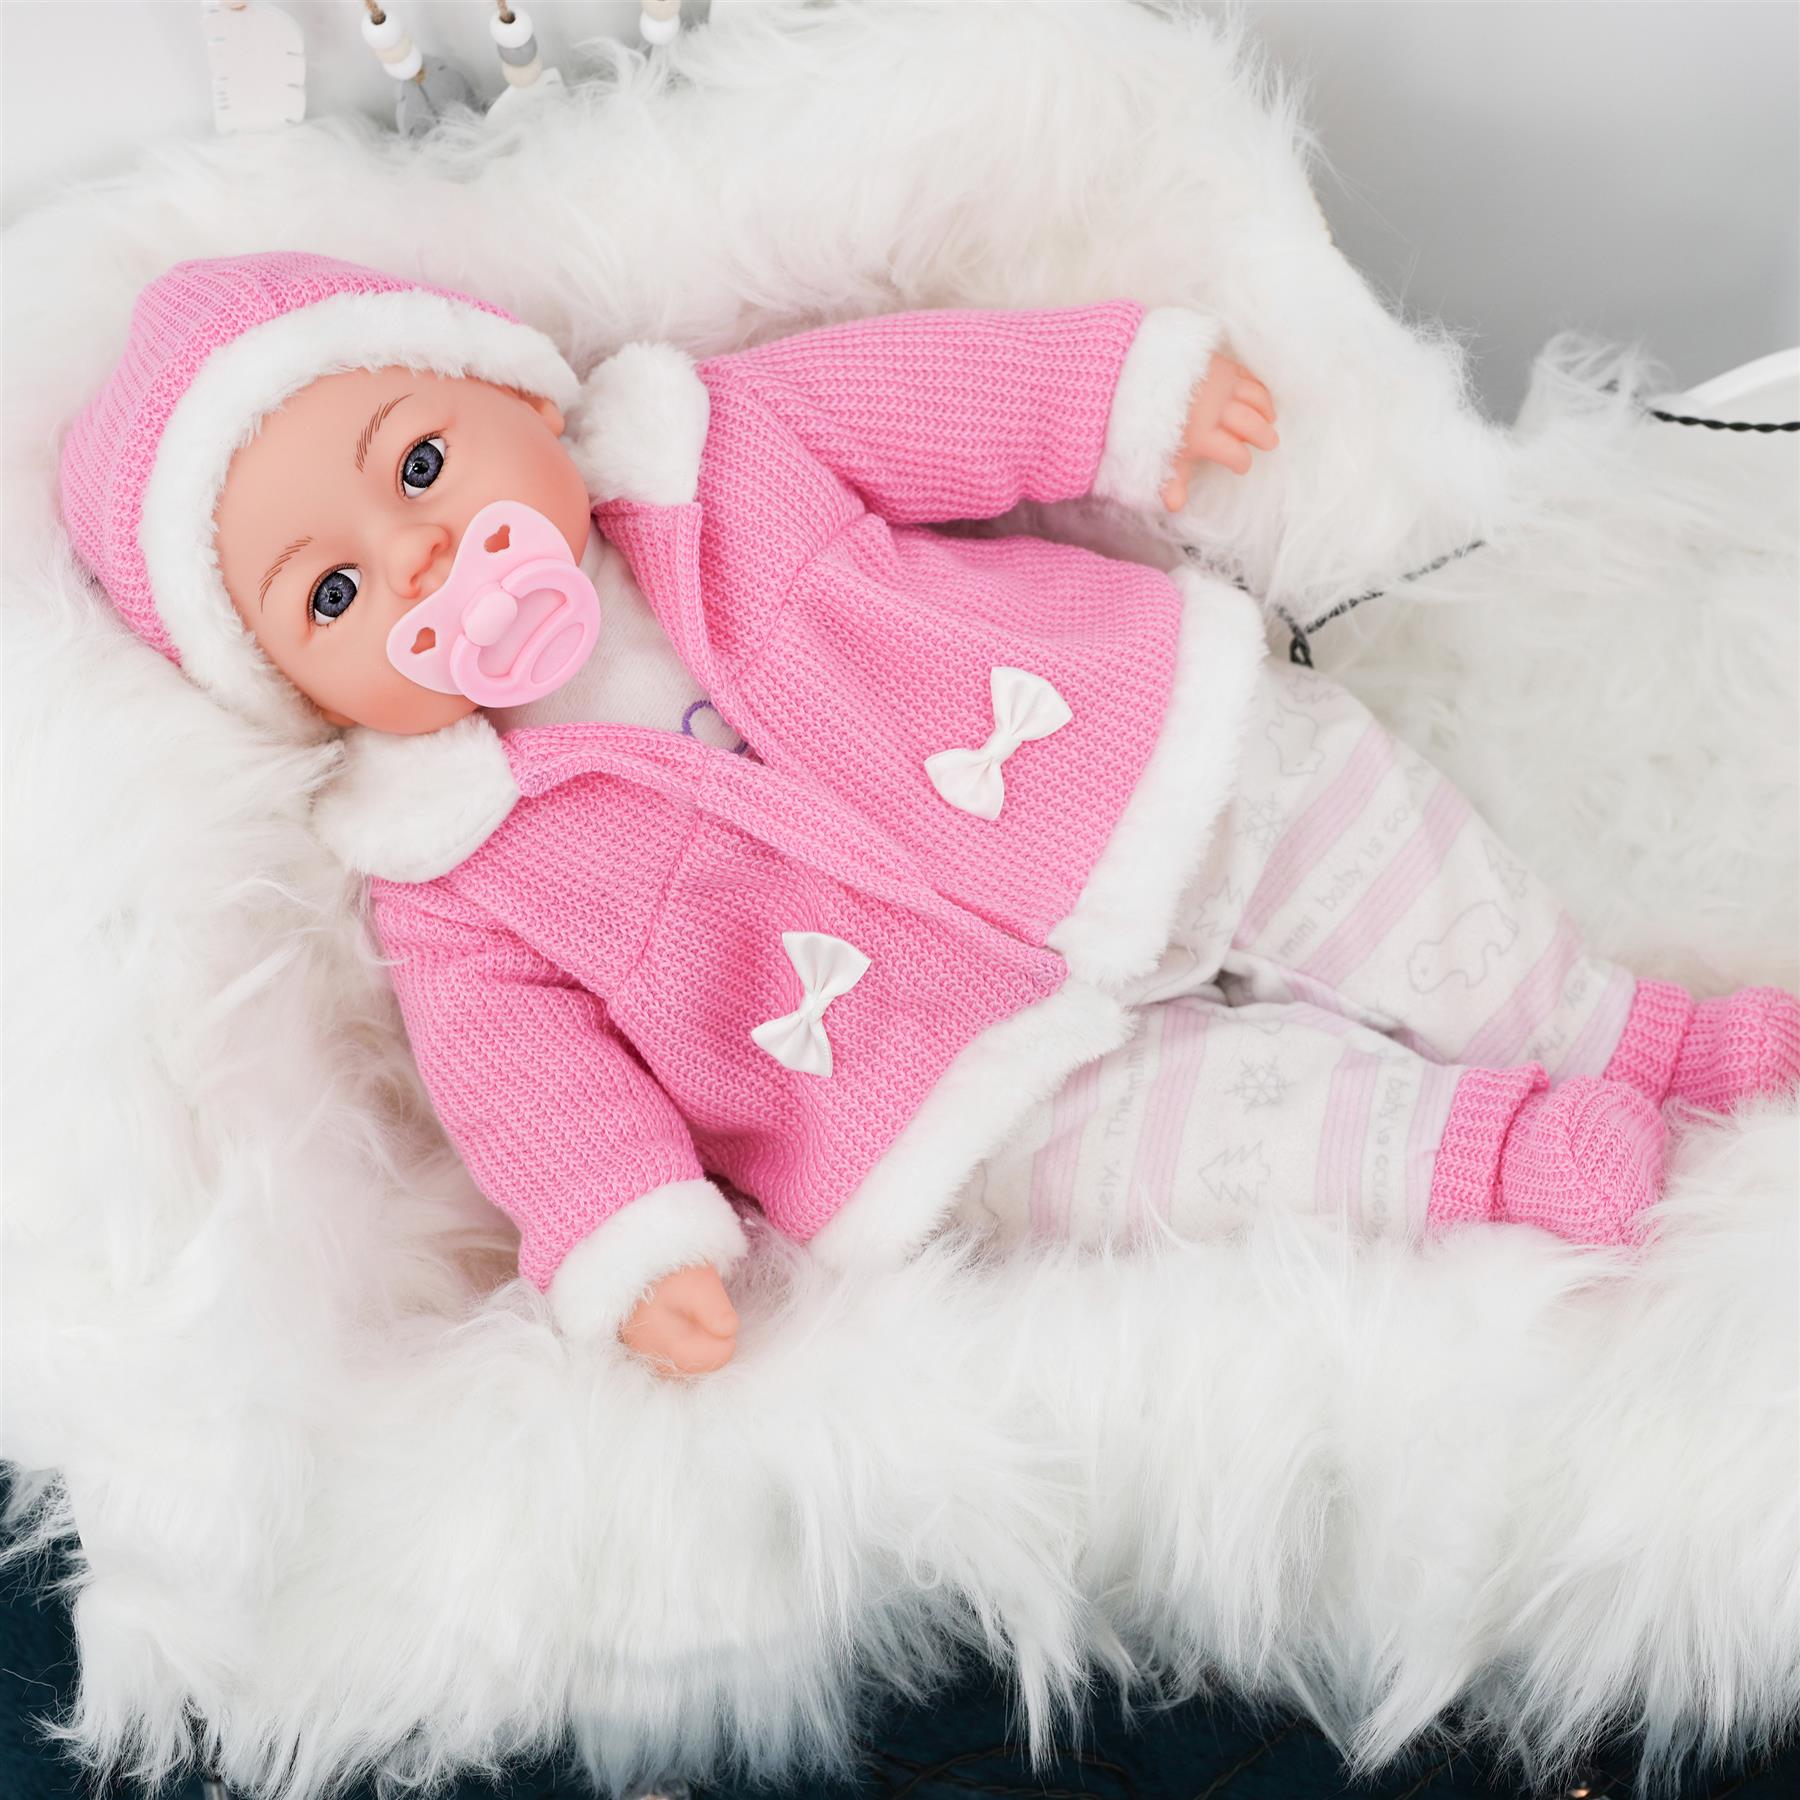 18" Bibi Girl Doll In Pink Coat by BiBi Doll - The Magic Toy Shop